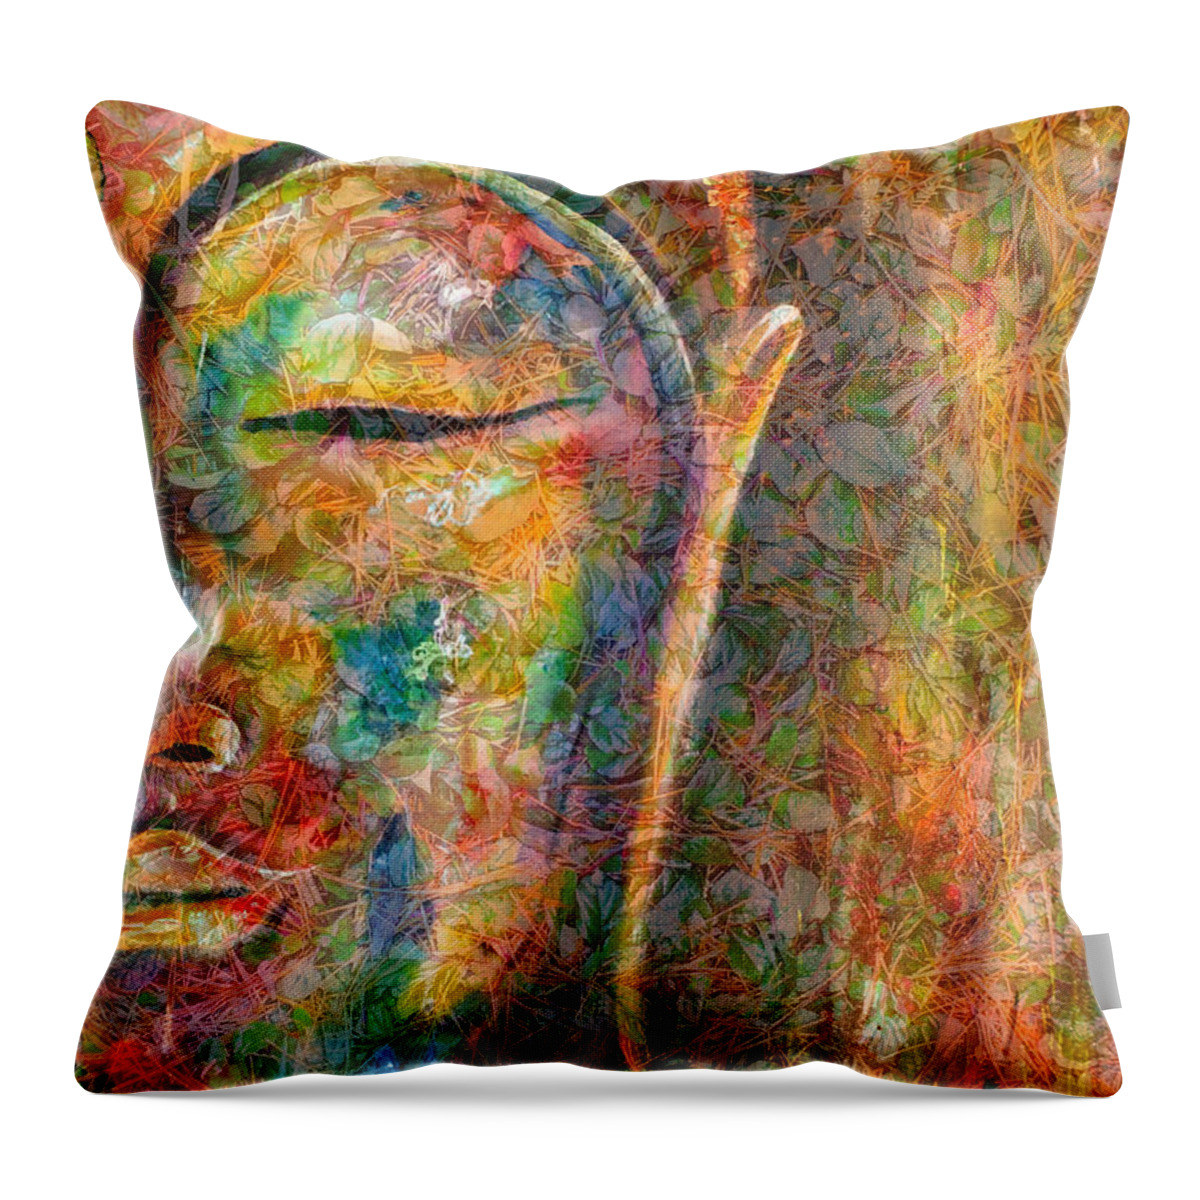 Buddha Throw Pillow featuring the digital art Budding Buddha by Theresa Marie Johnson